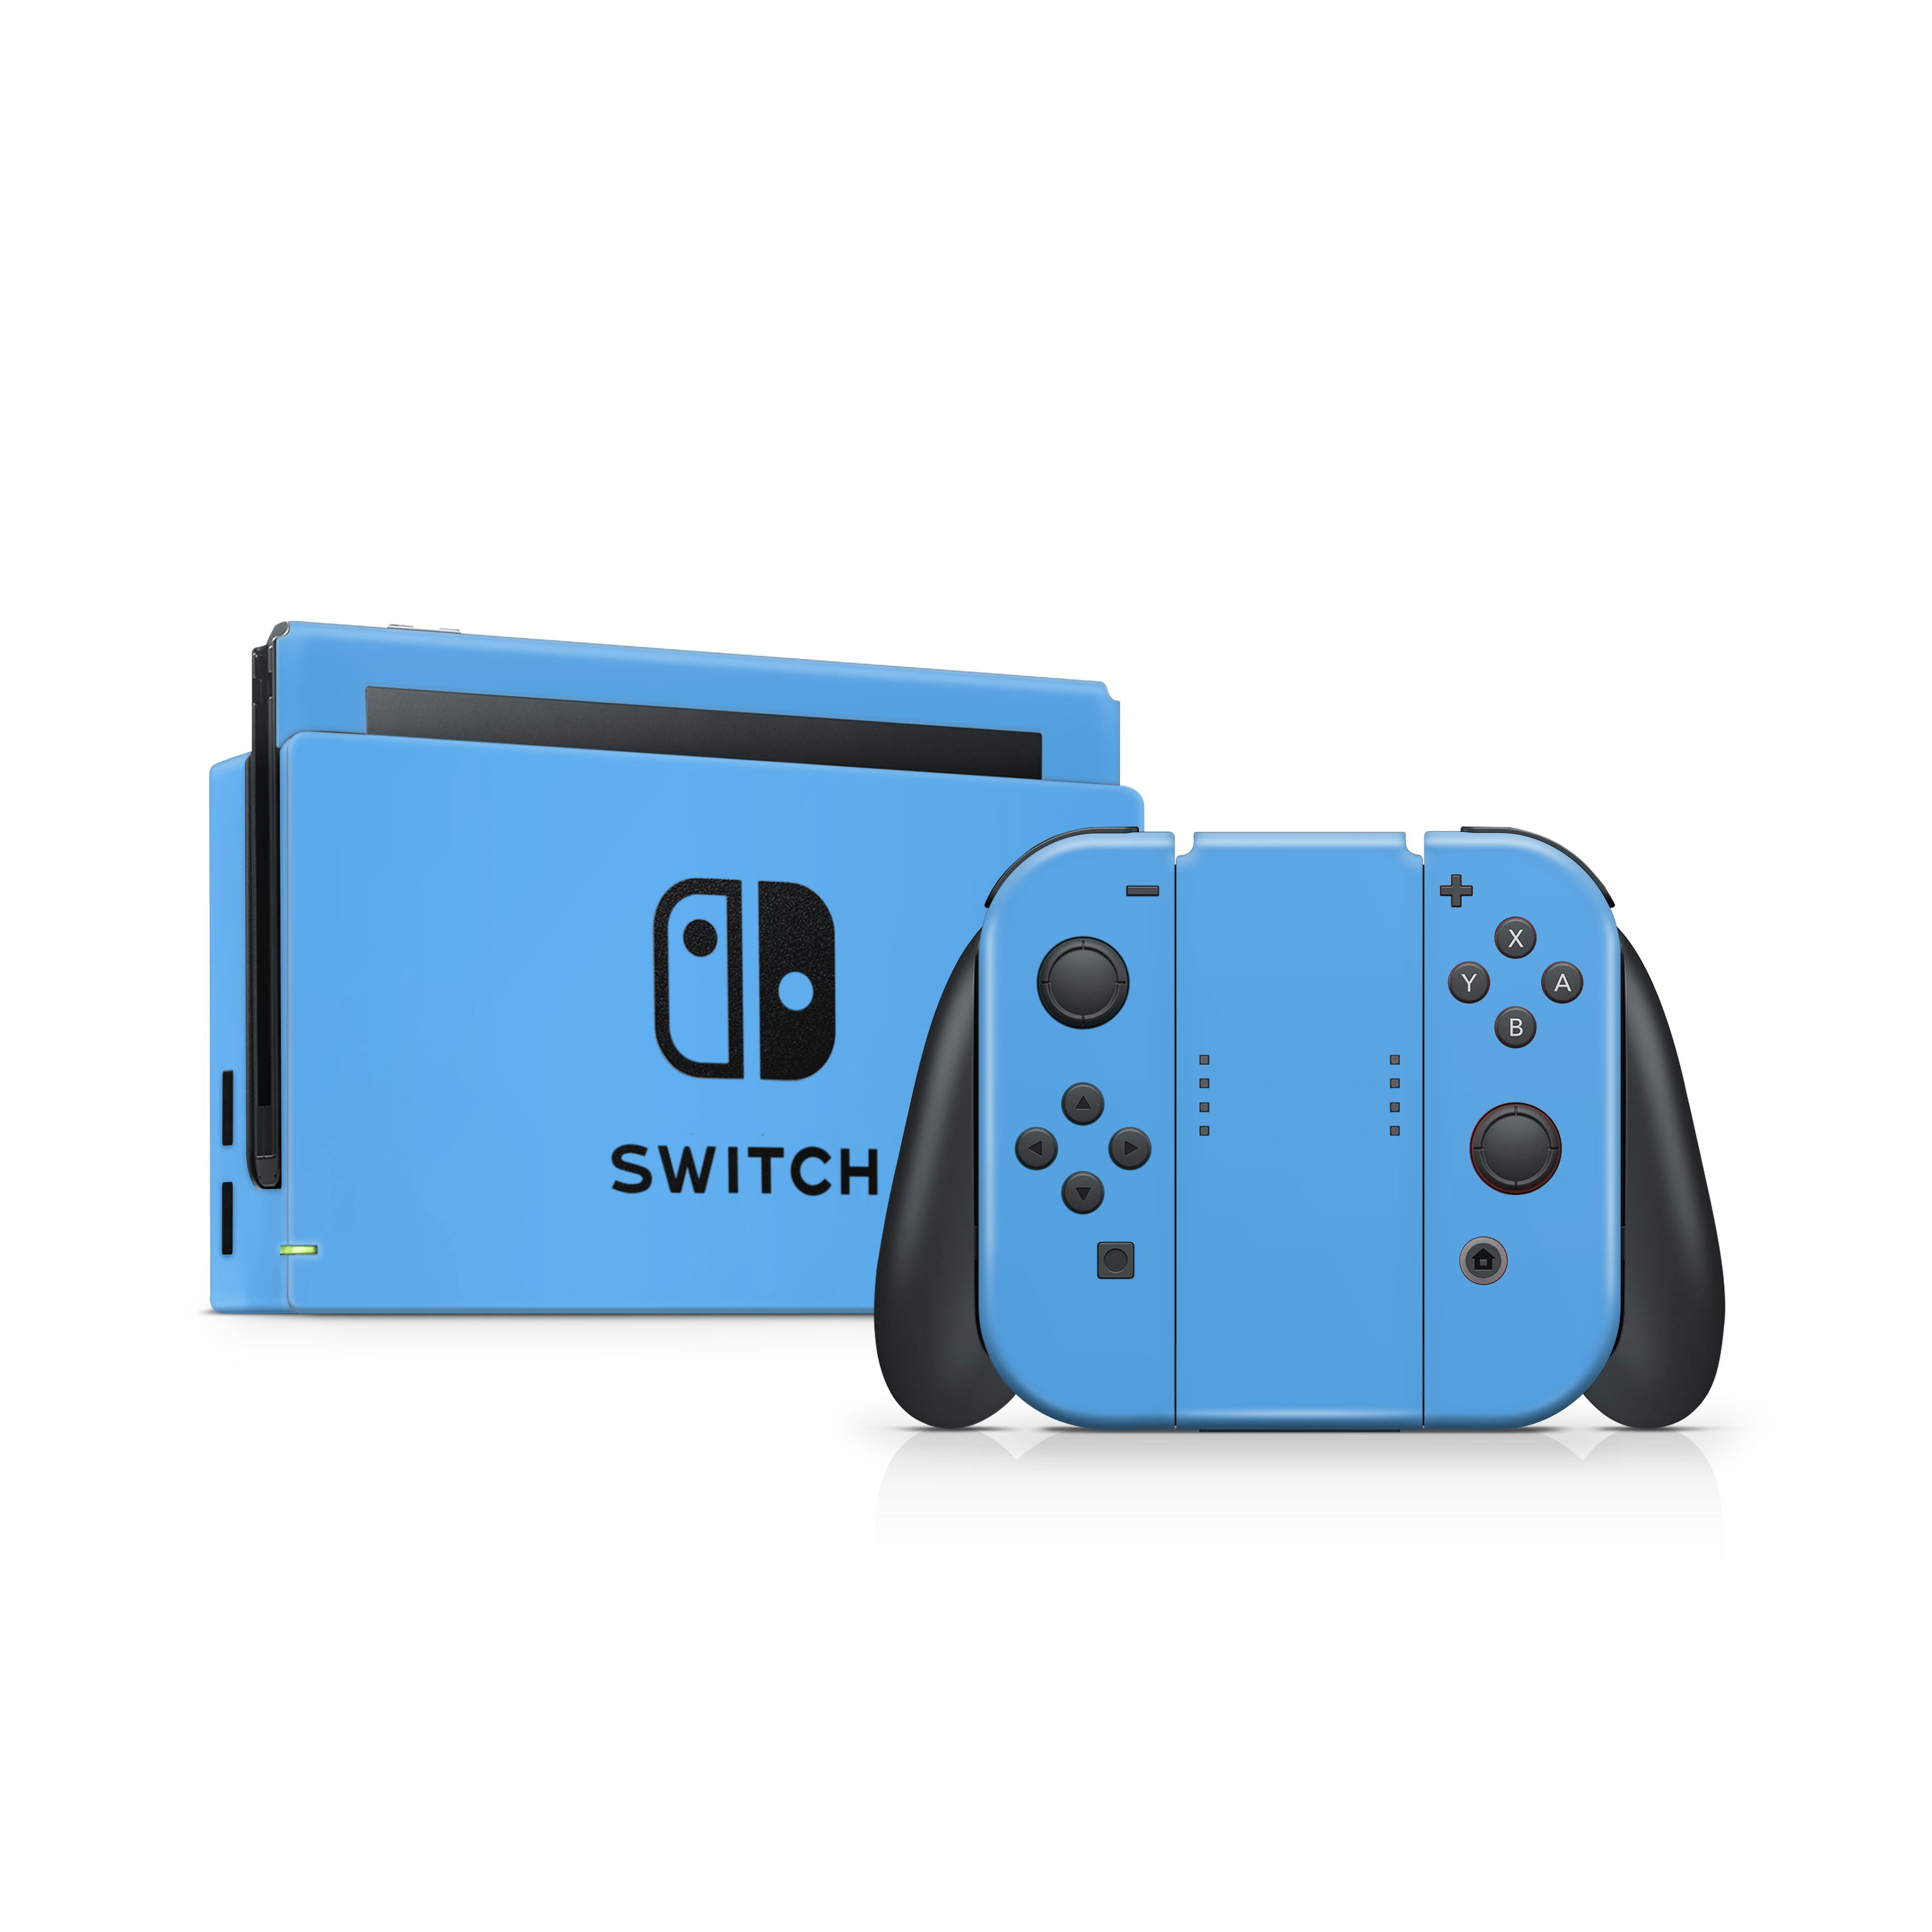 Electric Blue Nintendo Switch Skin